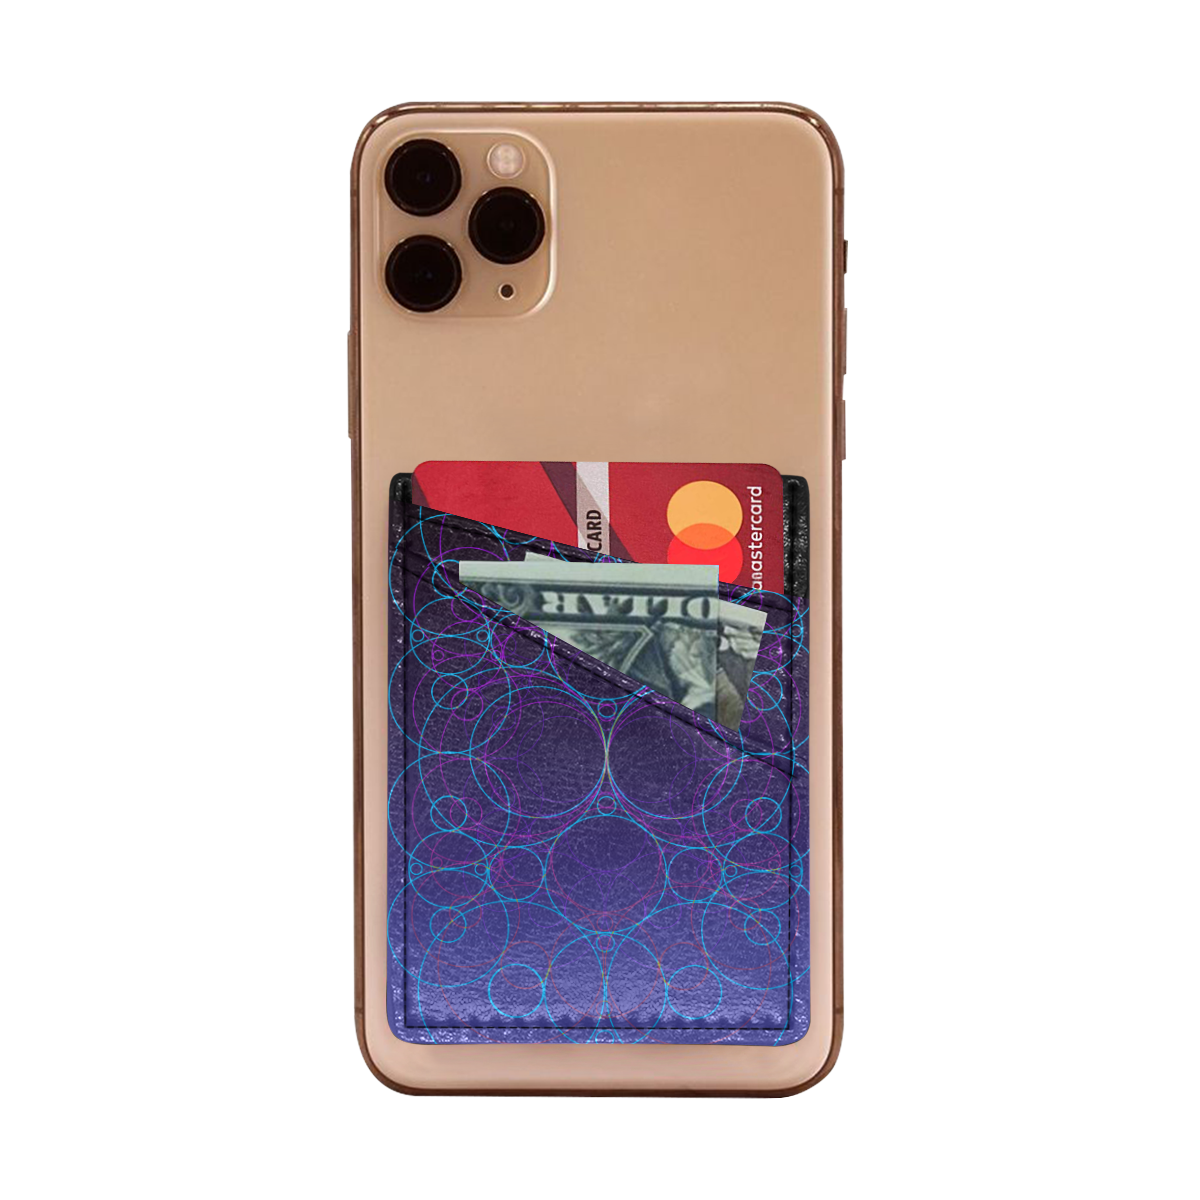 Trendy Geometric Design Cell Phone Card Holder